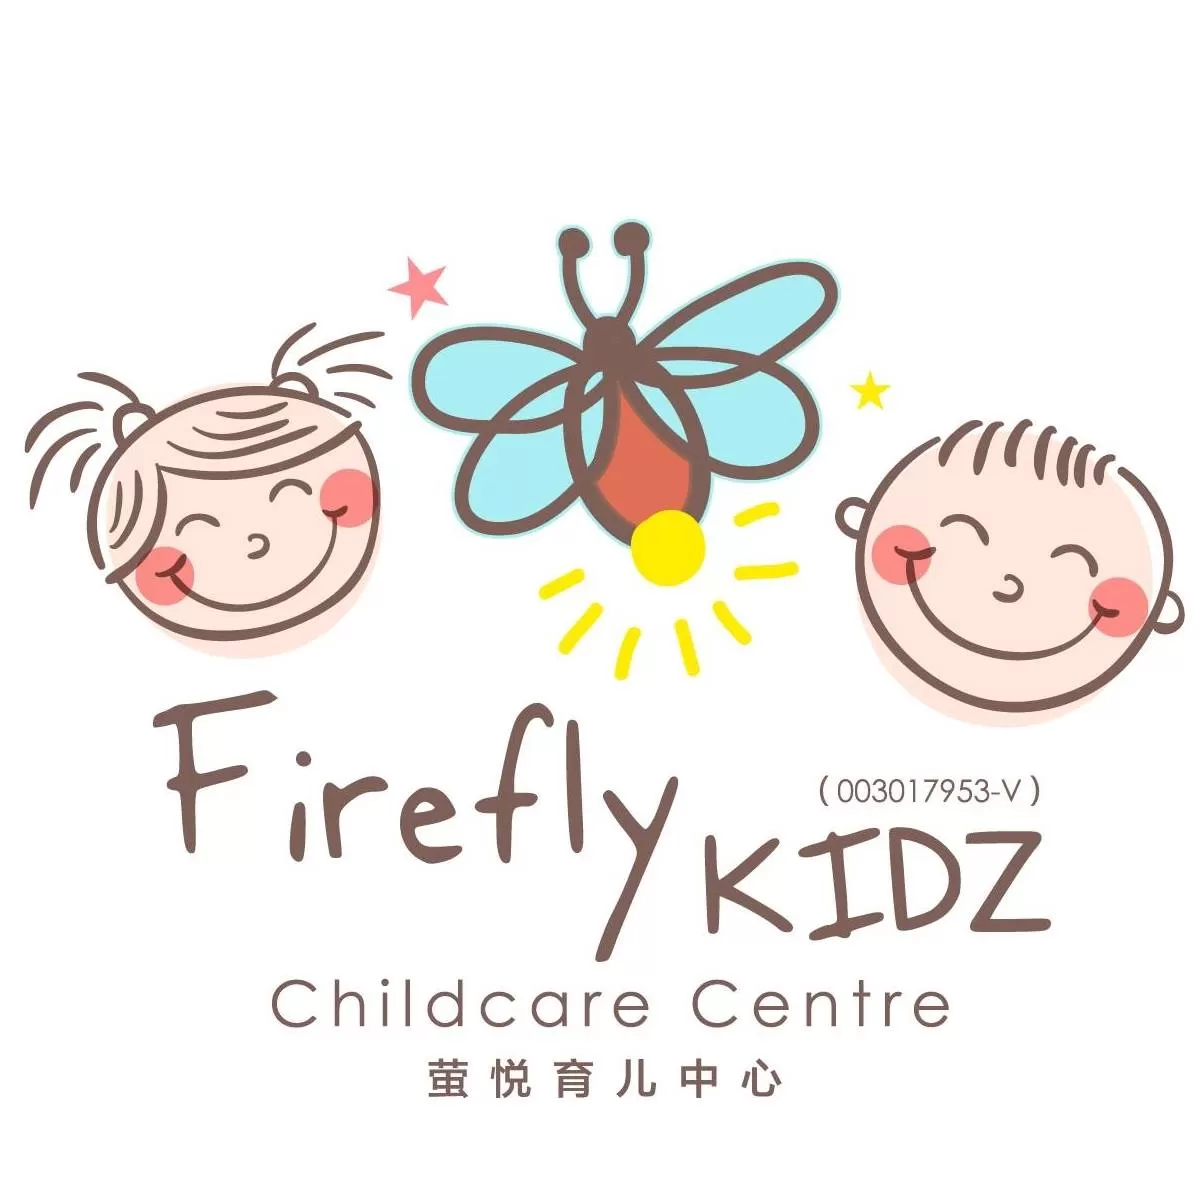 FireflyKidz Childcare Centre